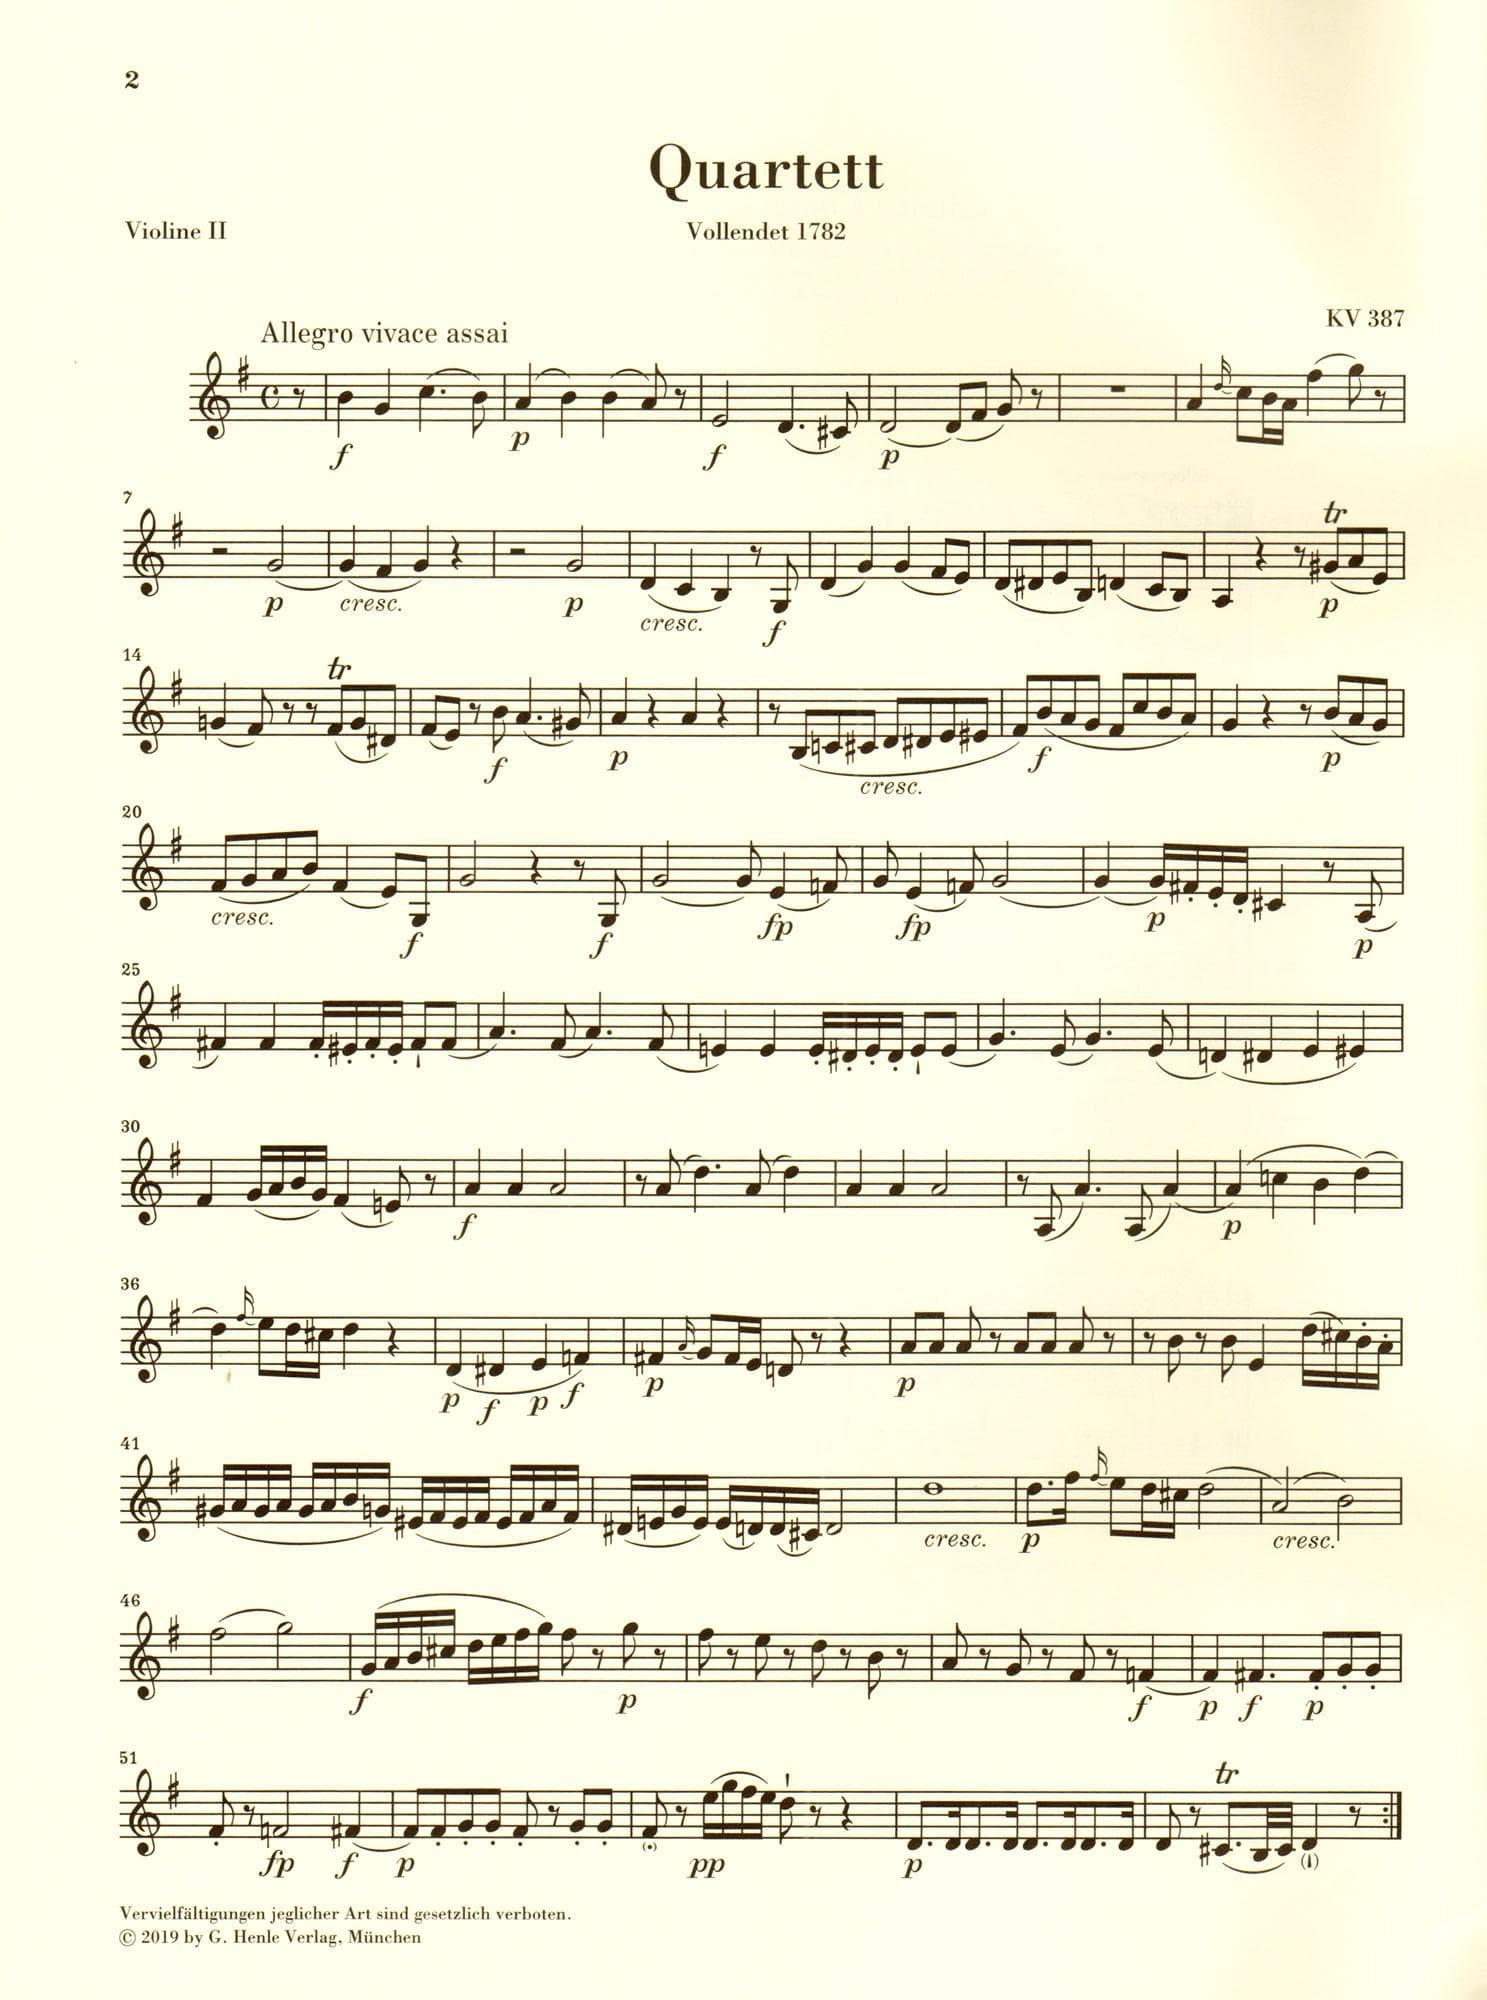 Mozart, W.A. - String Quartets, Volume III: Haydn Quartets - for String Quartet - G. Henle Verlag URTEXT